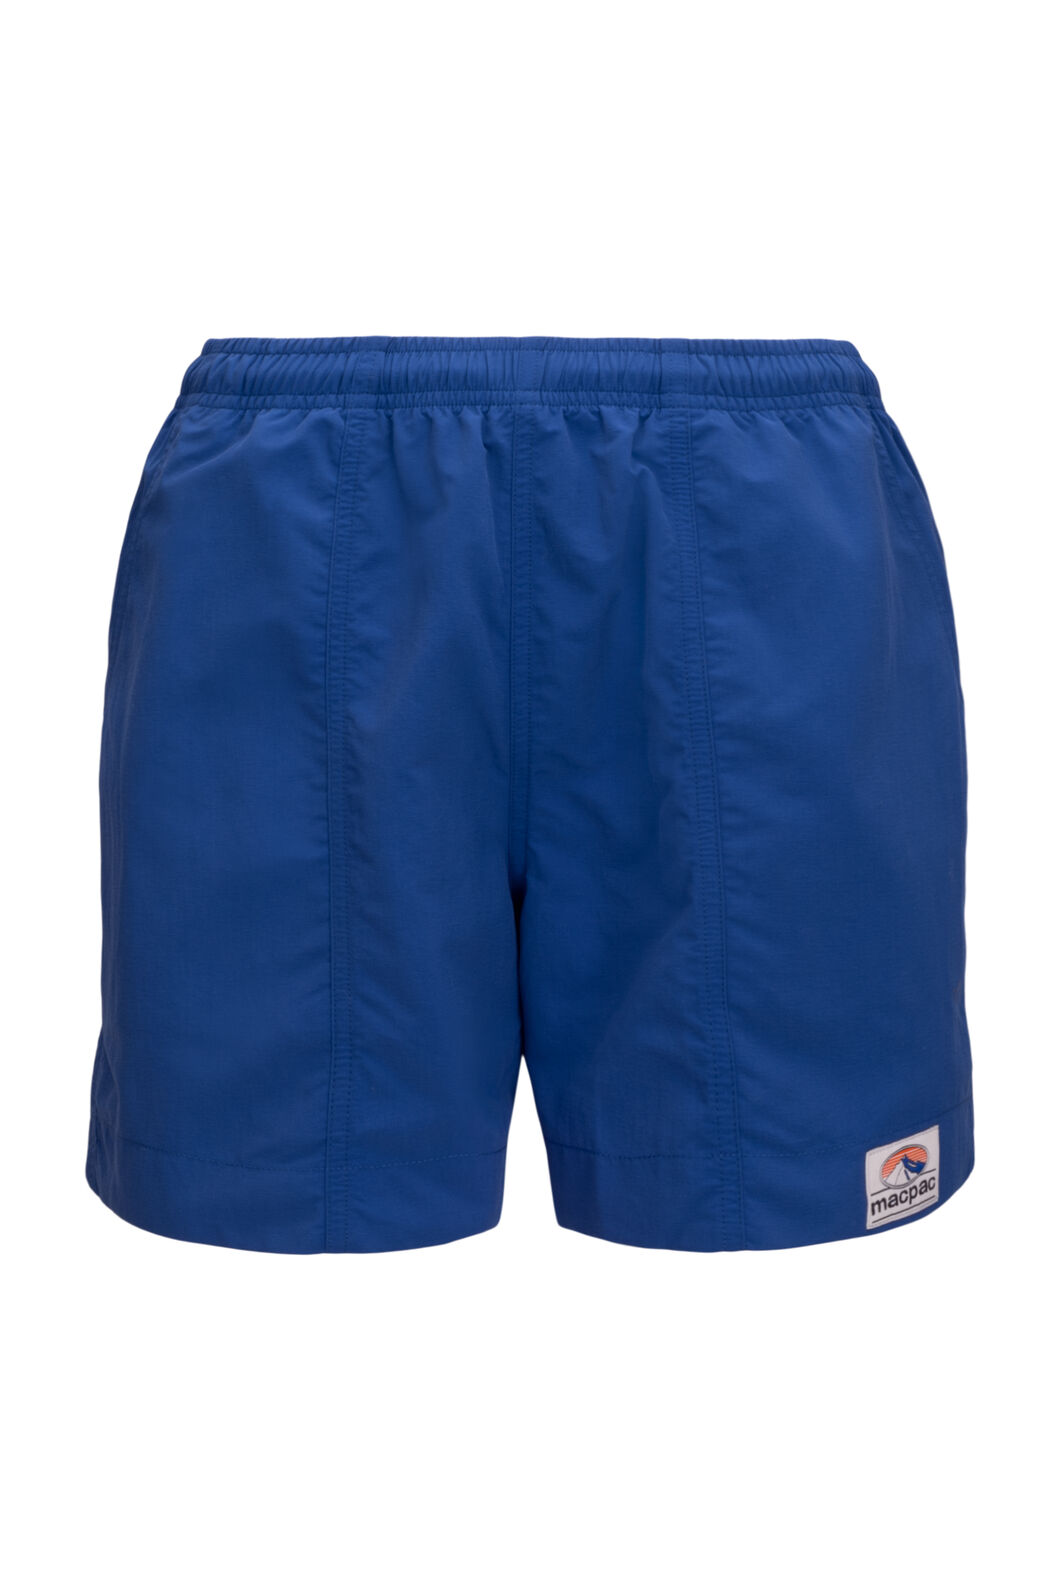 Macpac Men's Winger Shorts | Macpac